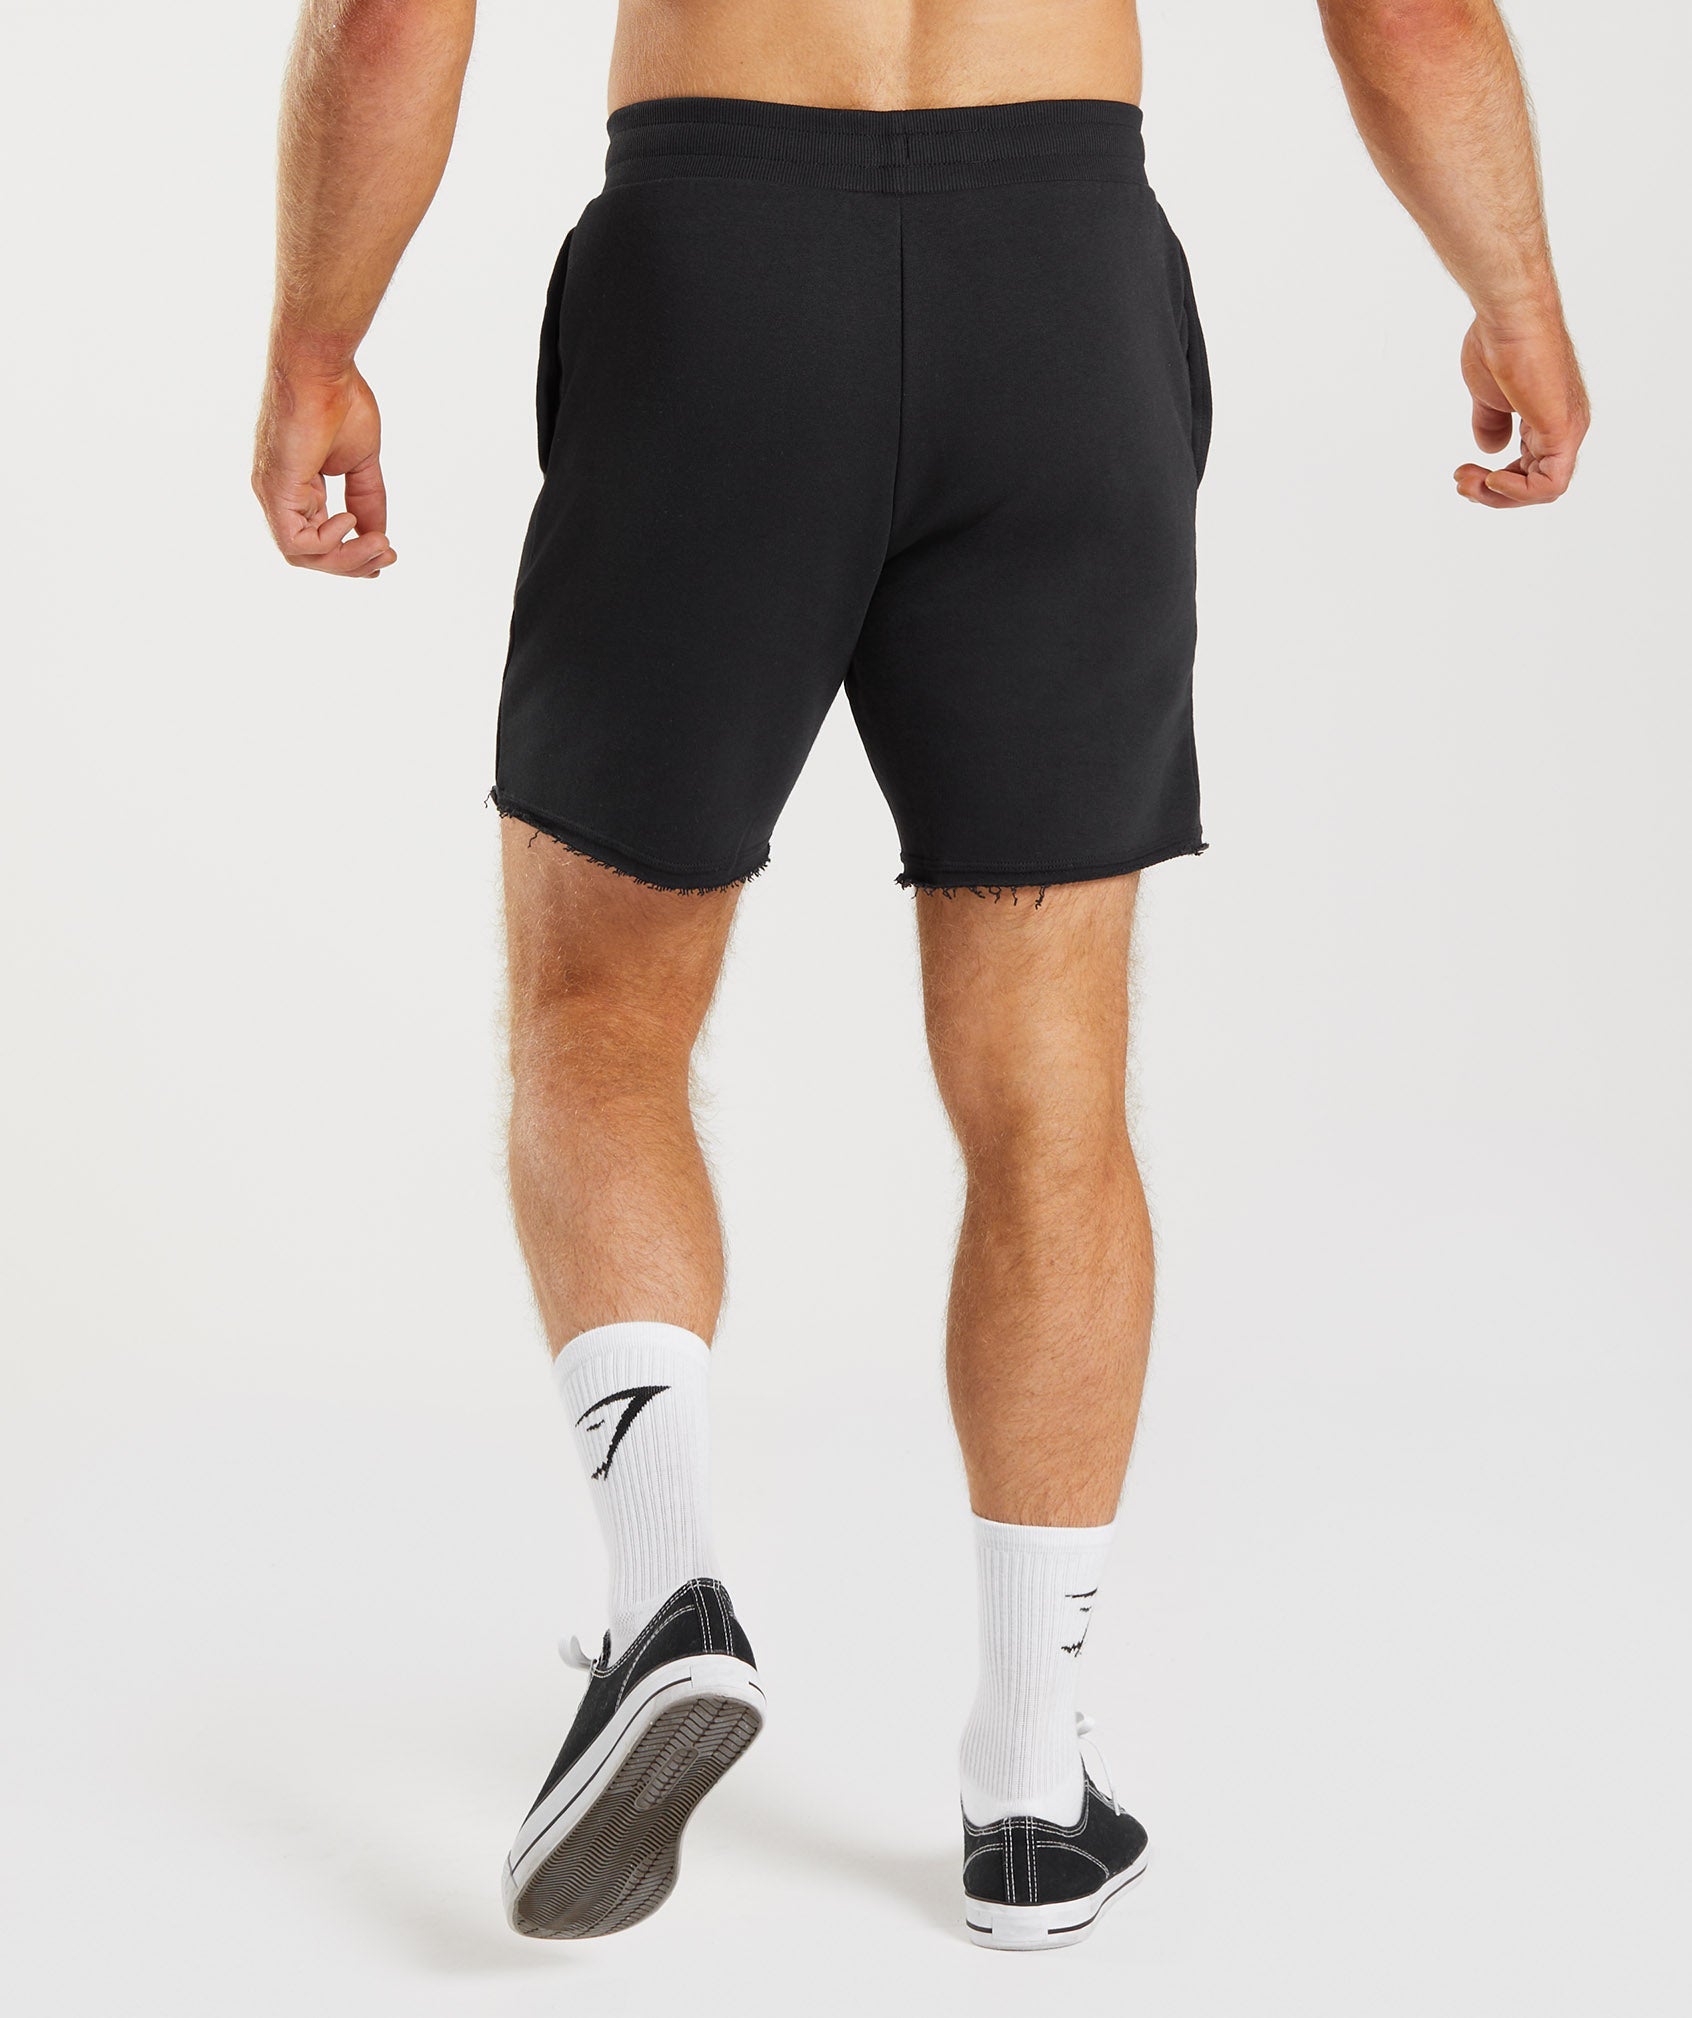 Men's Black Gym Shorts & Sports Shorts – Gymshark